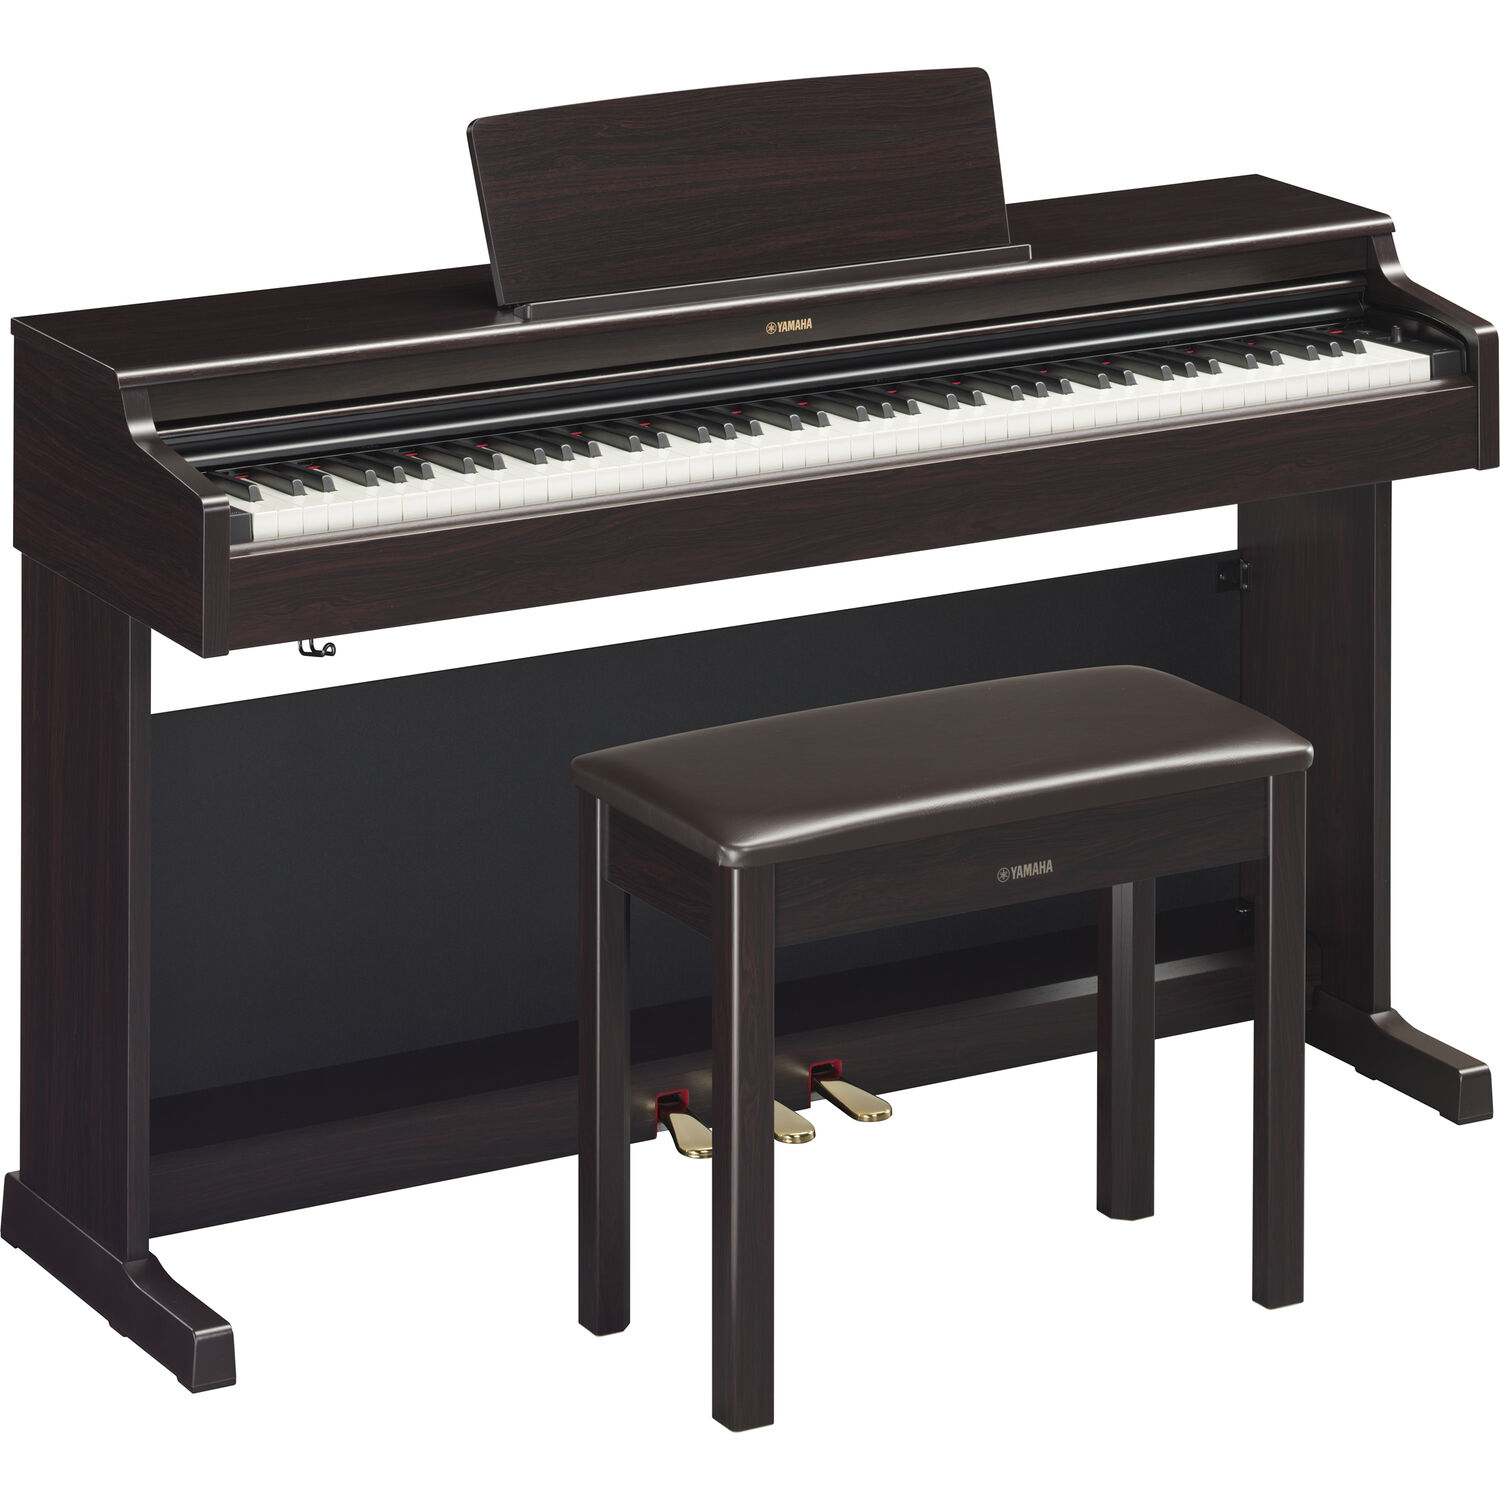 Piano Digital de Consola Yamaha Arius Ydp 165 de 88 Teclas con Banqueta Madera de Rosa Oscura